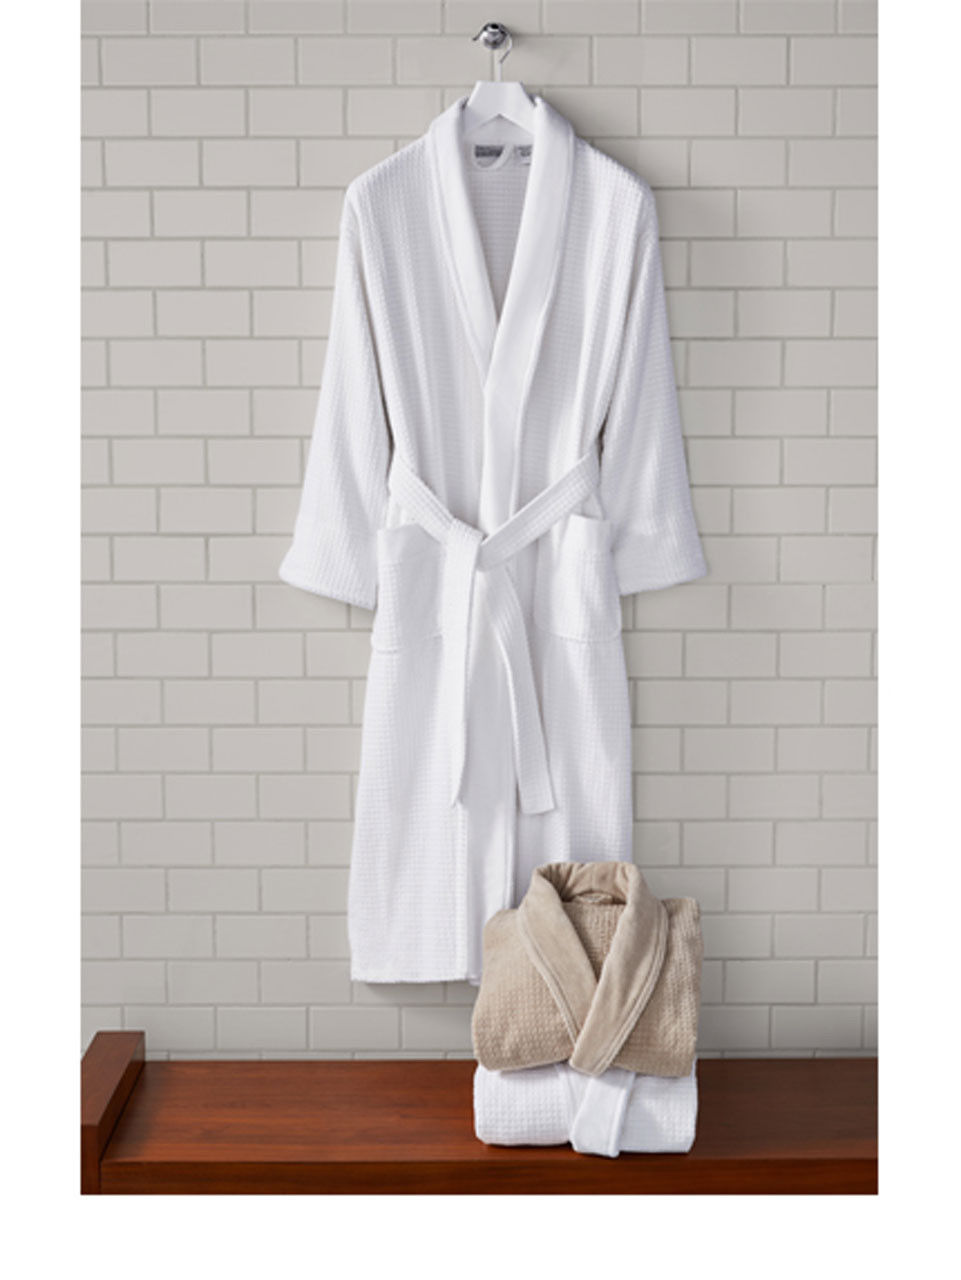 Does the 1concier robe provide a platinum shawl collar look?